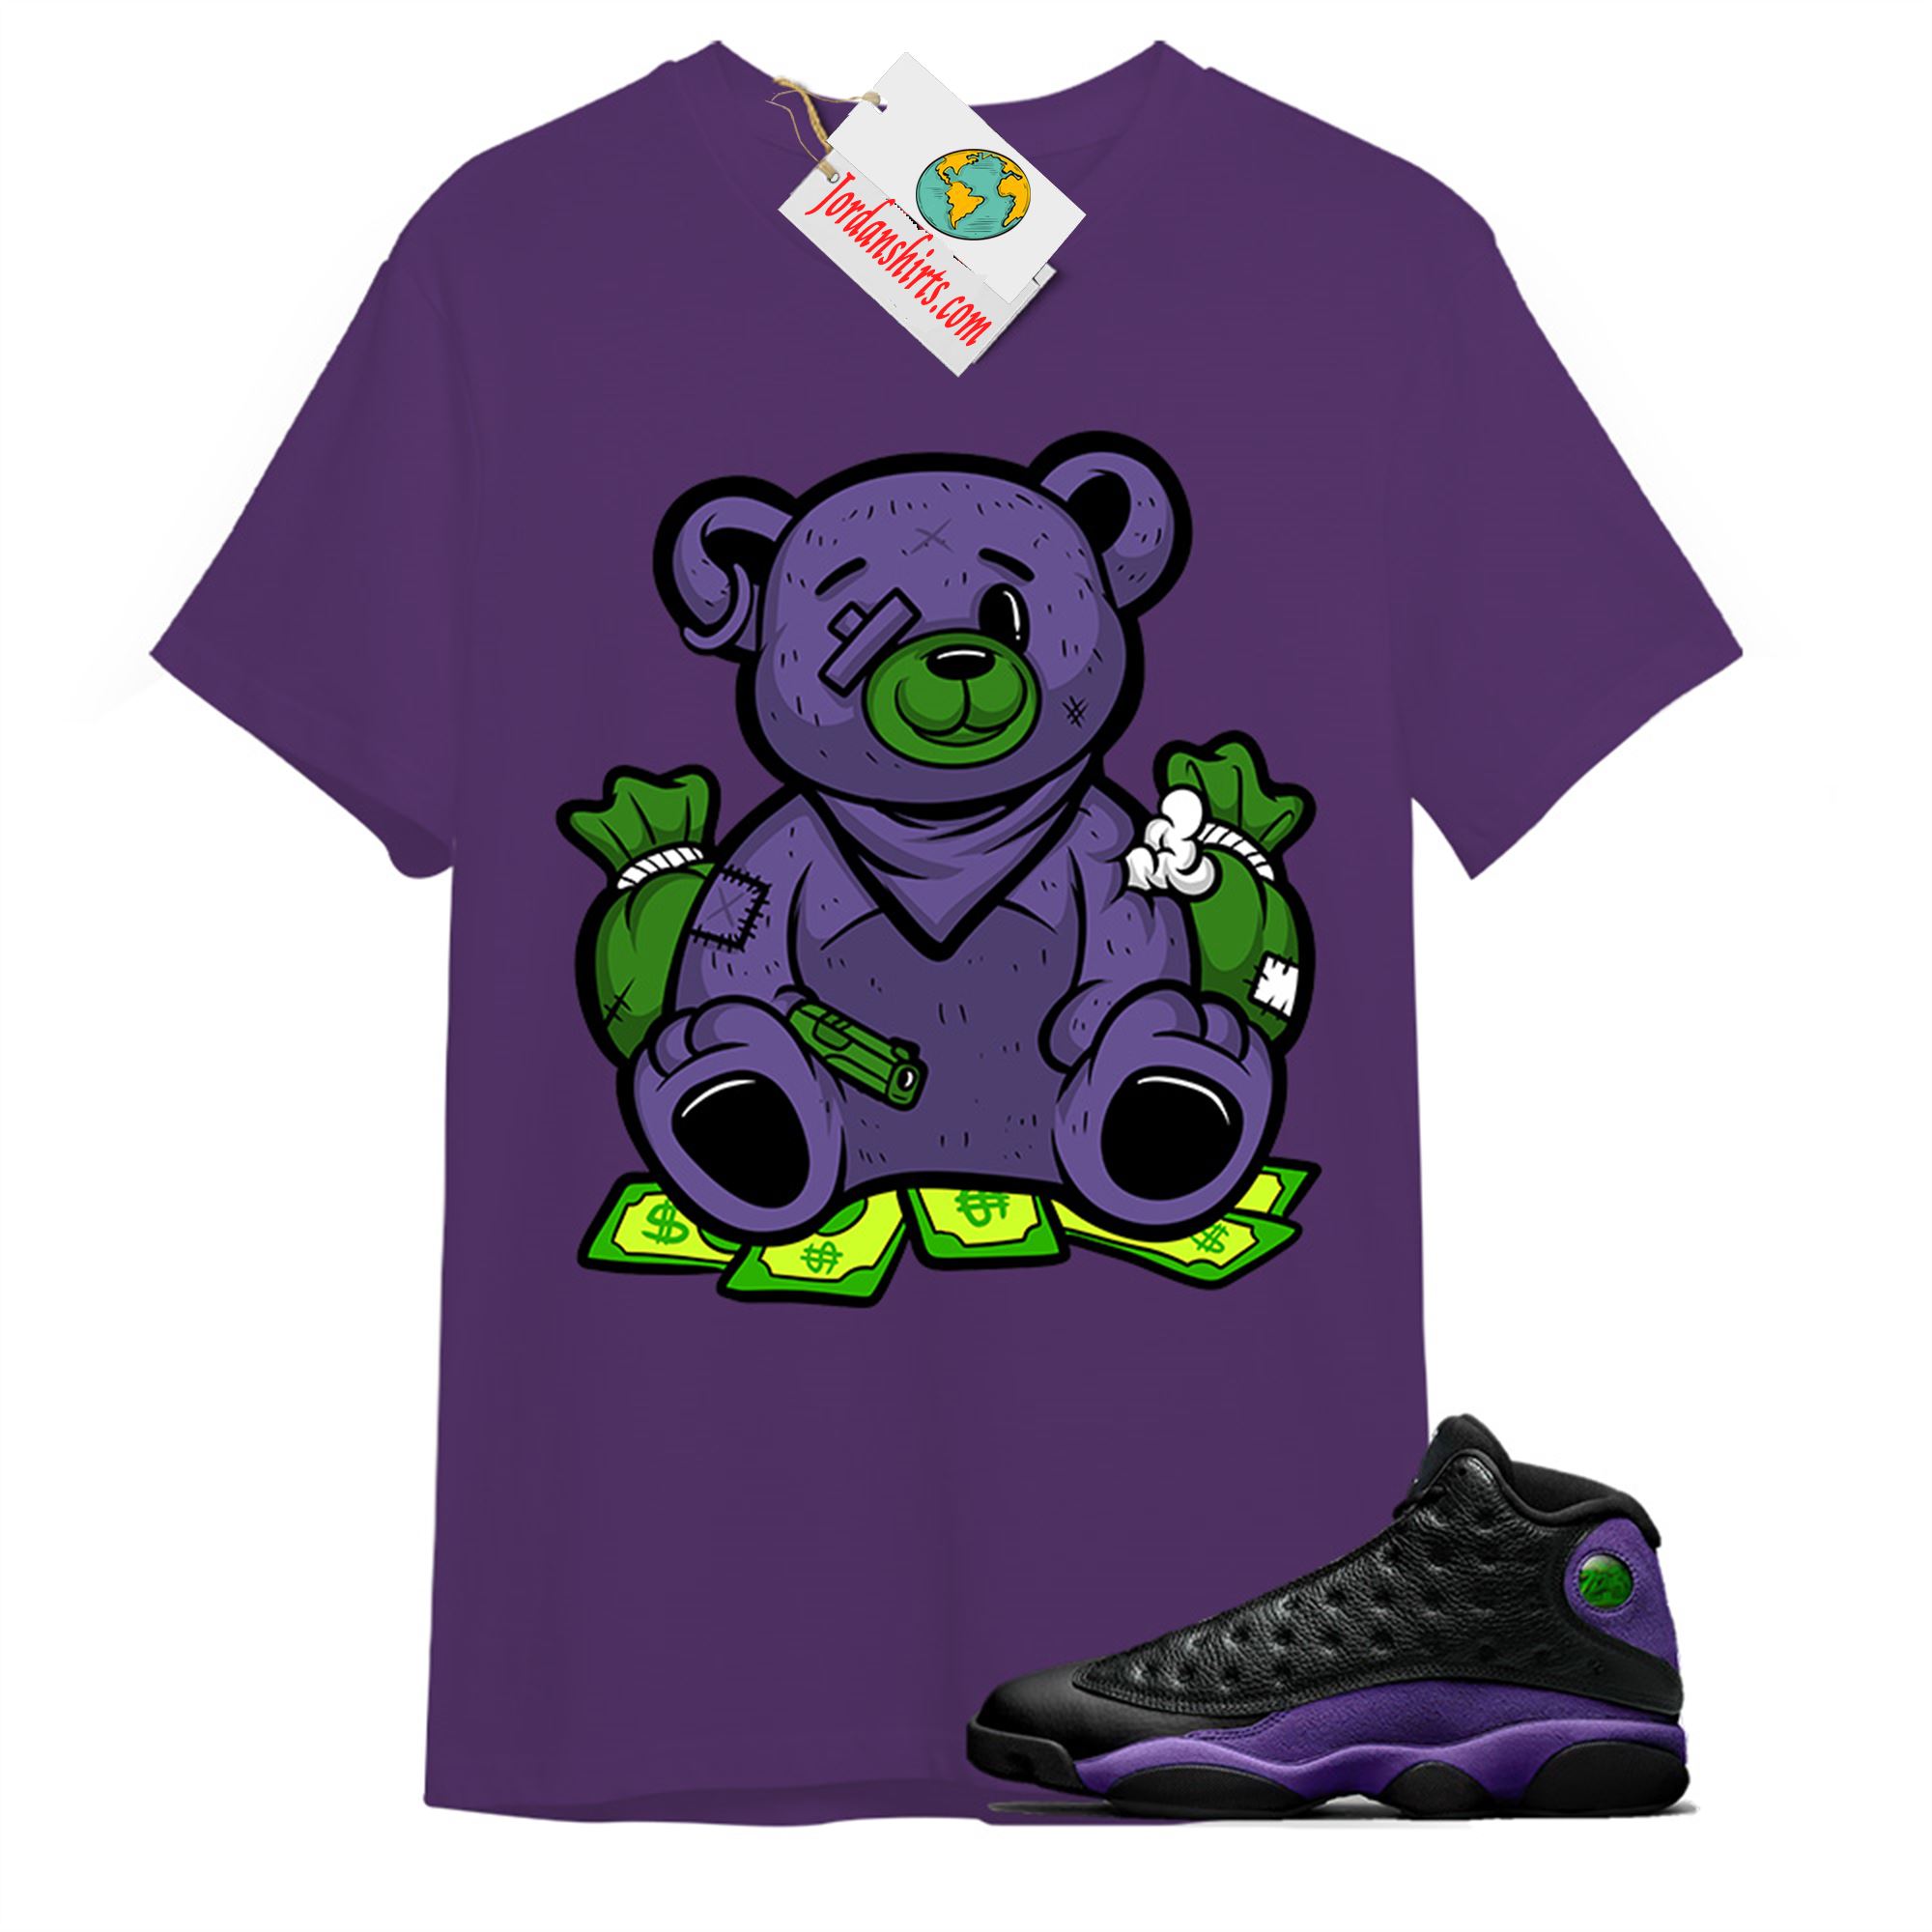 Jordan 13 Shirt, Rich Teddy Bear Gangster Purple T-shirt Air Jordan 13 Court Purple 13s Plus Size Up To 5xl